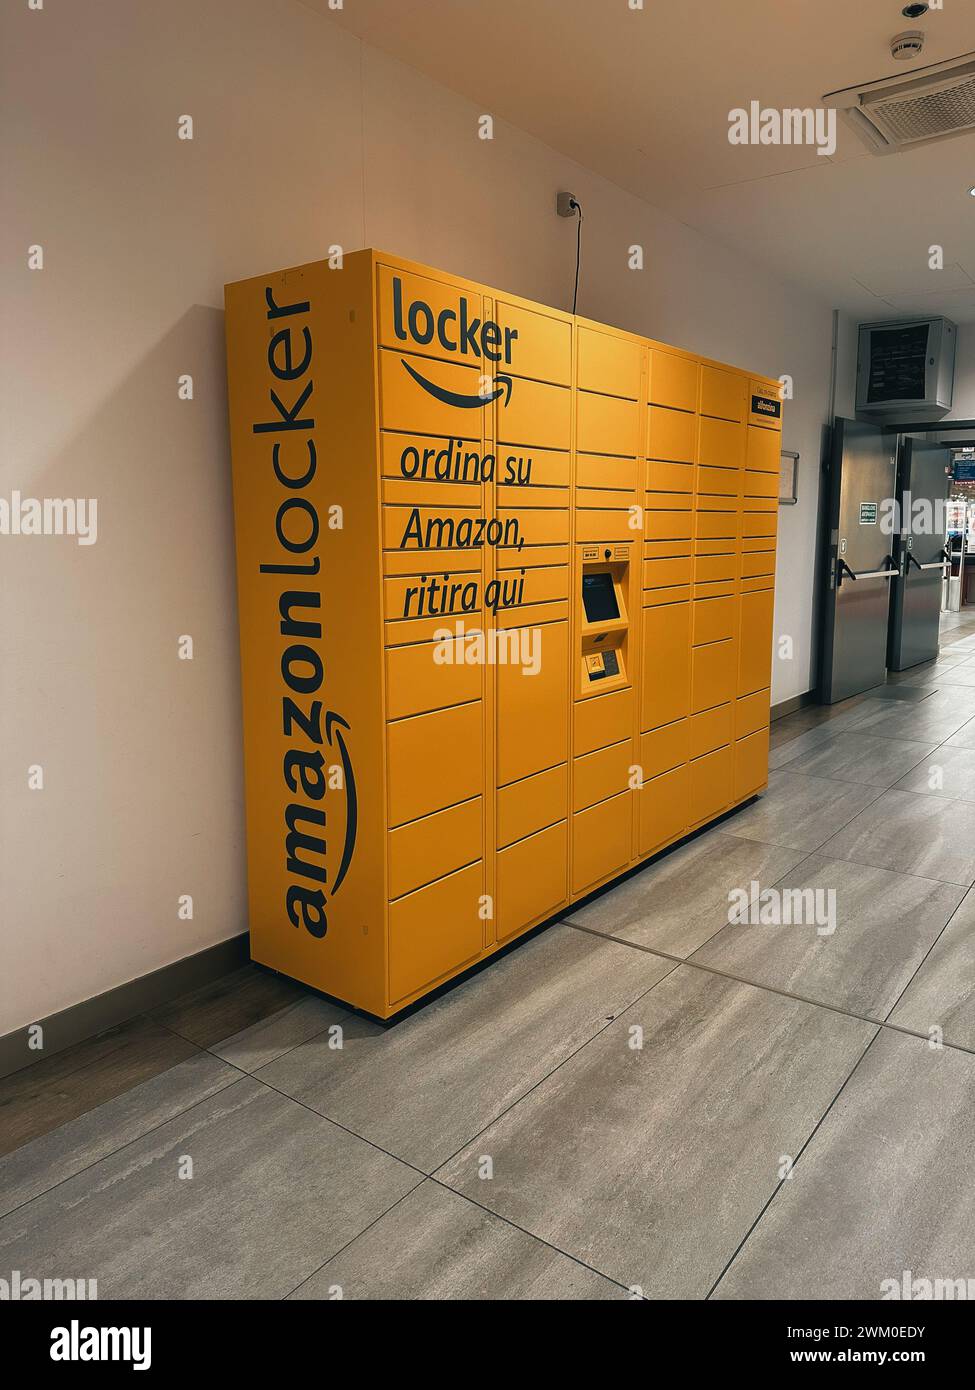 Amazon logo on locker in room Stock Photo